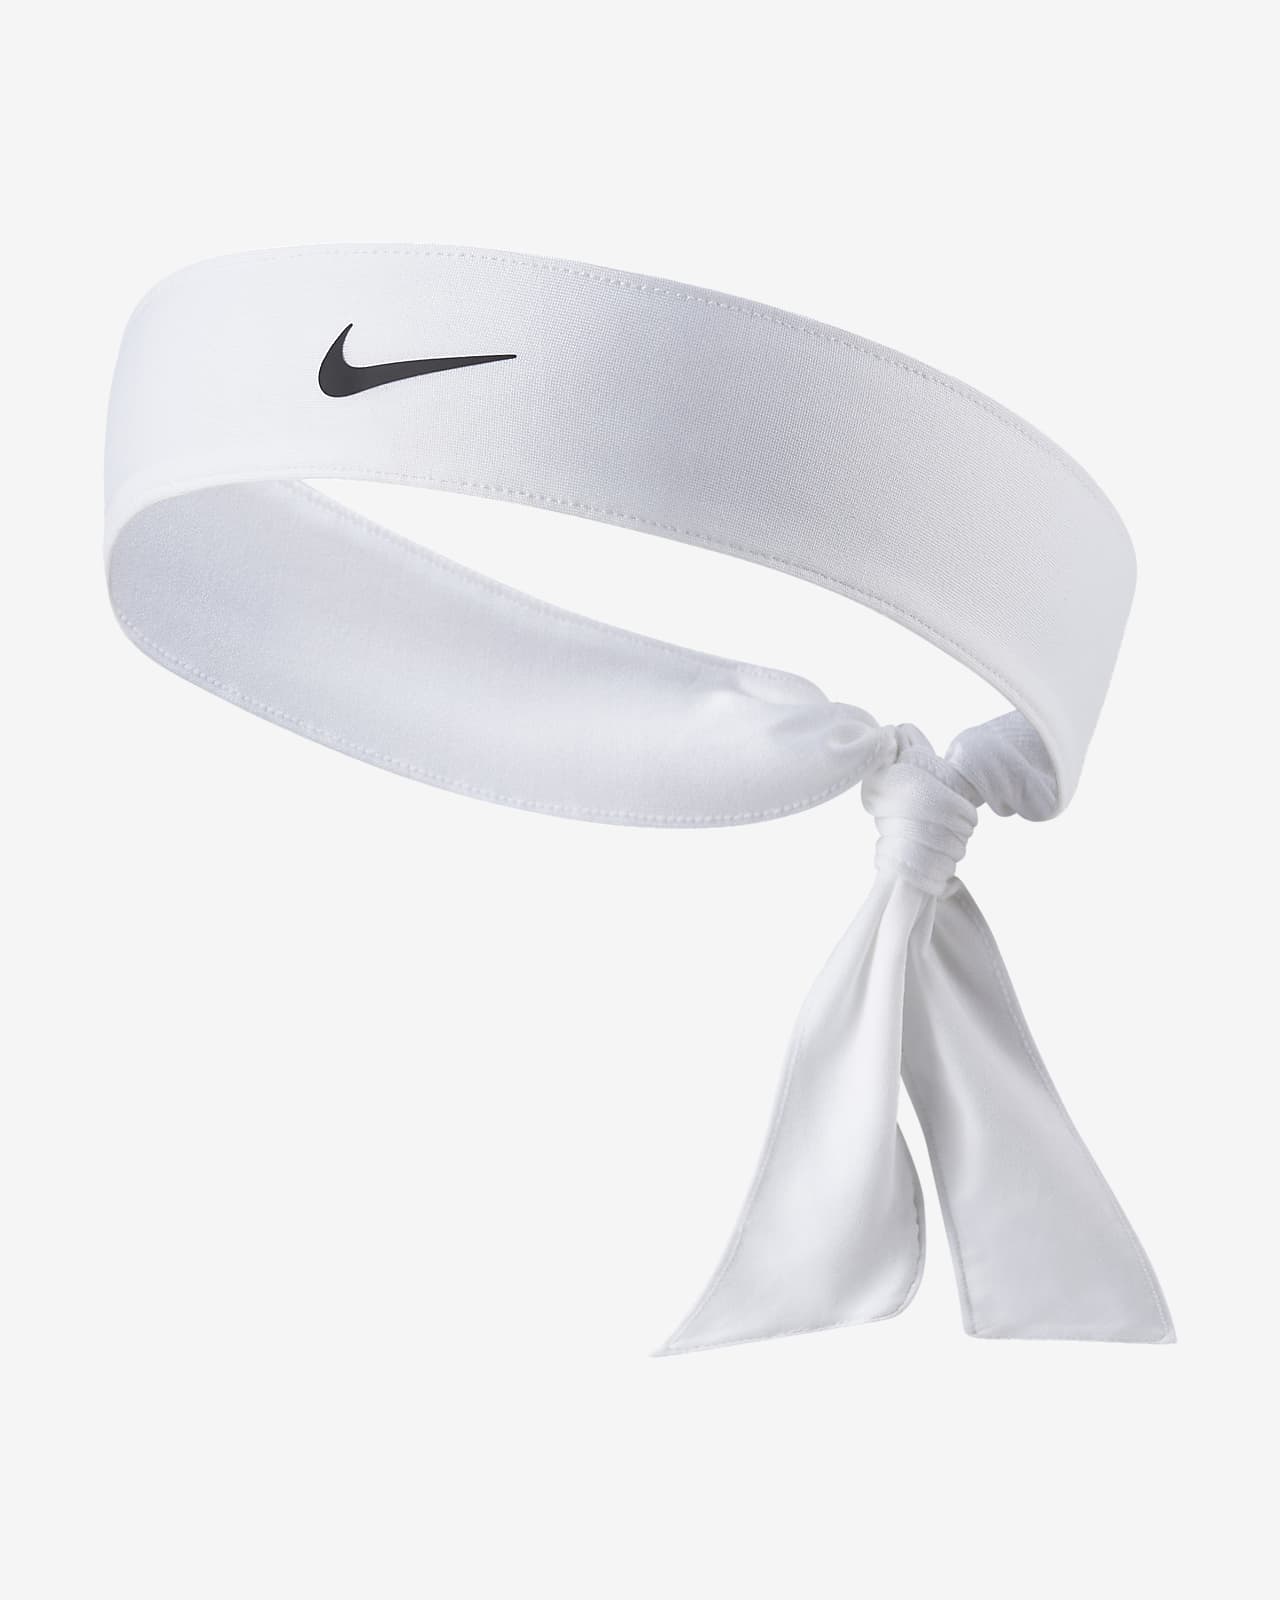 NikeCourt Cinta absorbent de tennis - Dona